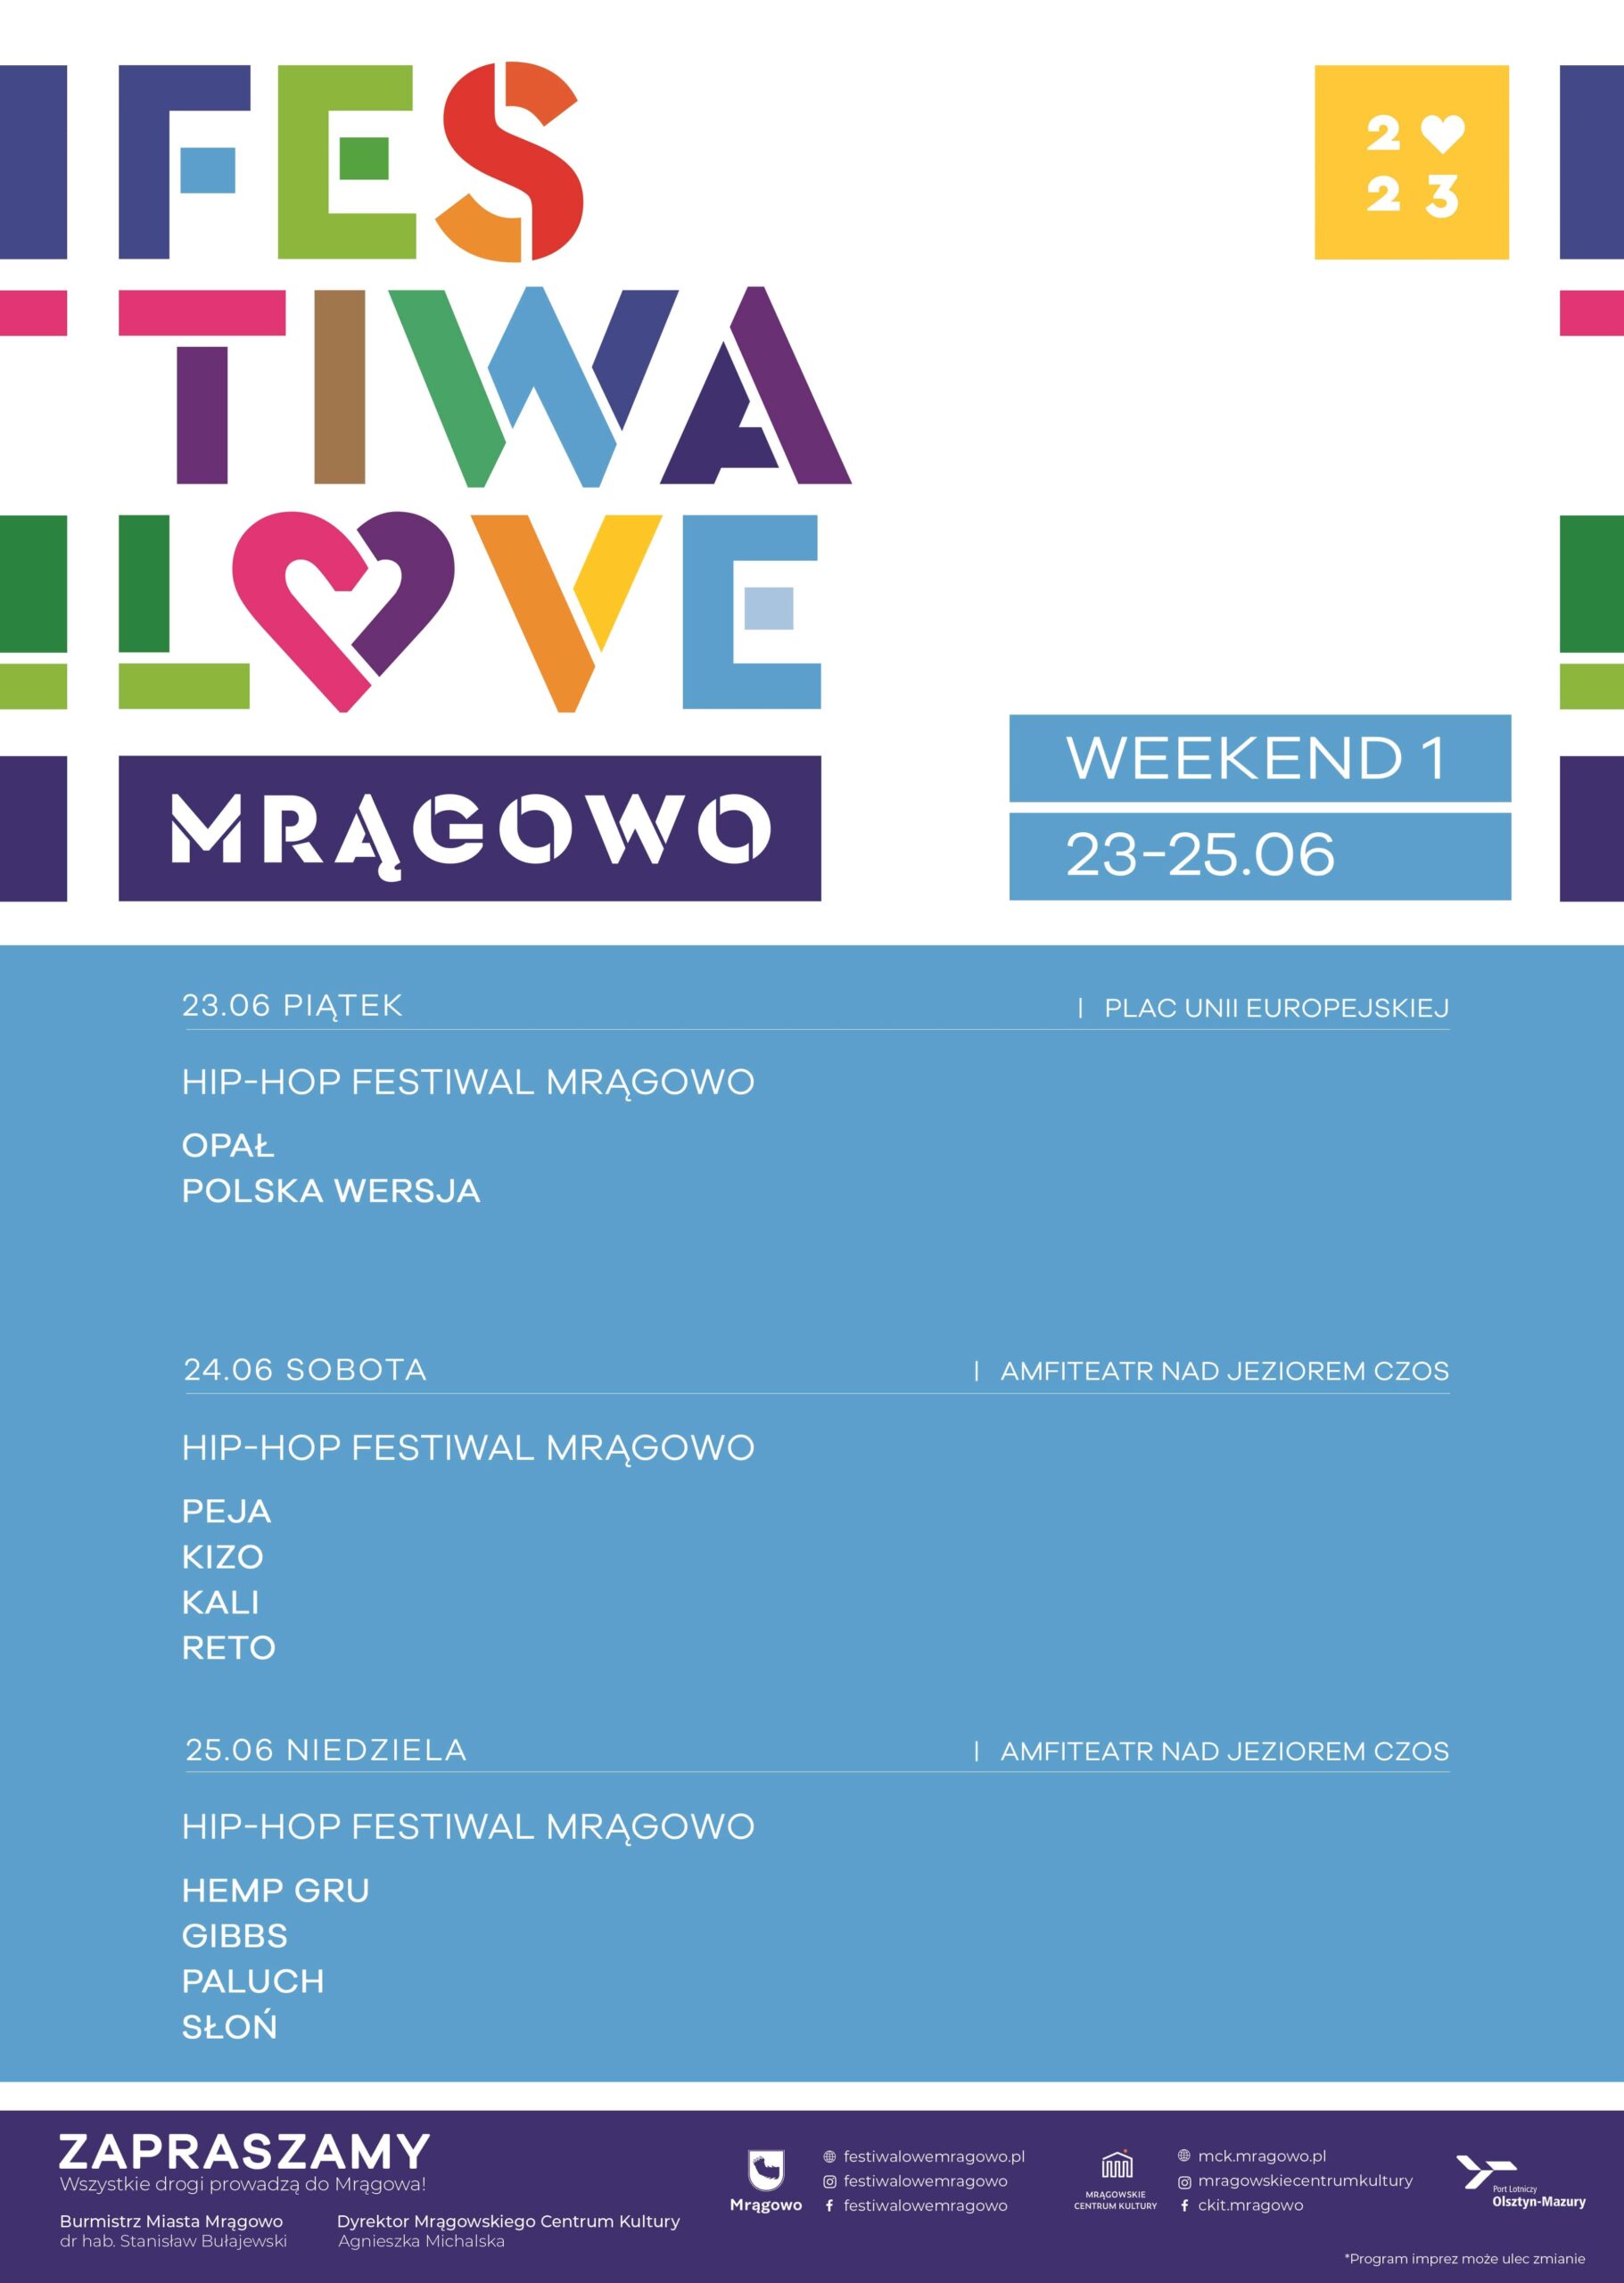 Festiwalowe Mrągowo - weekend I